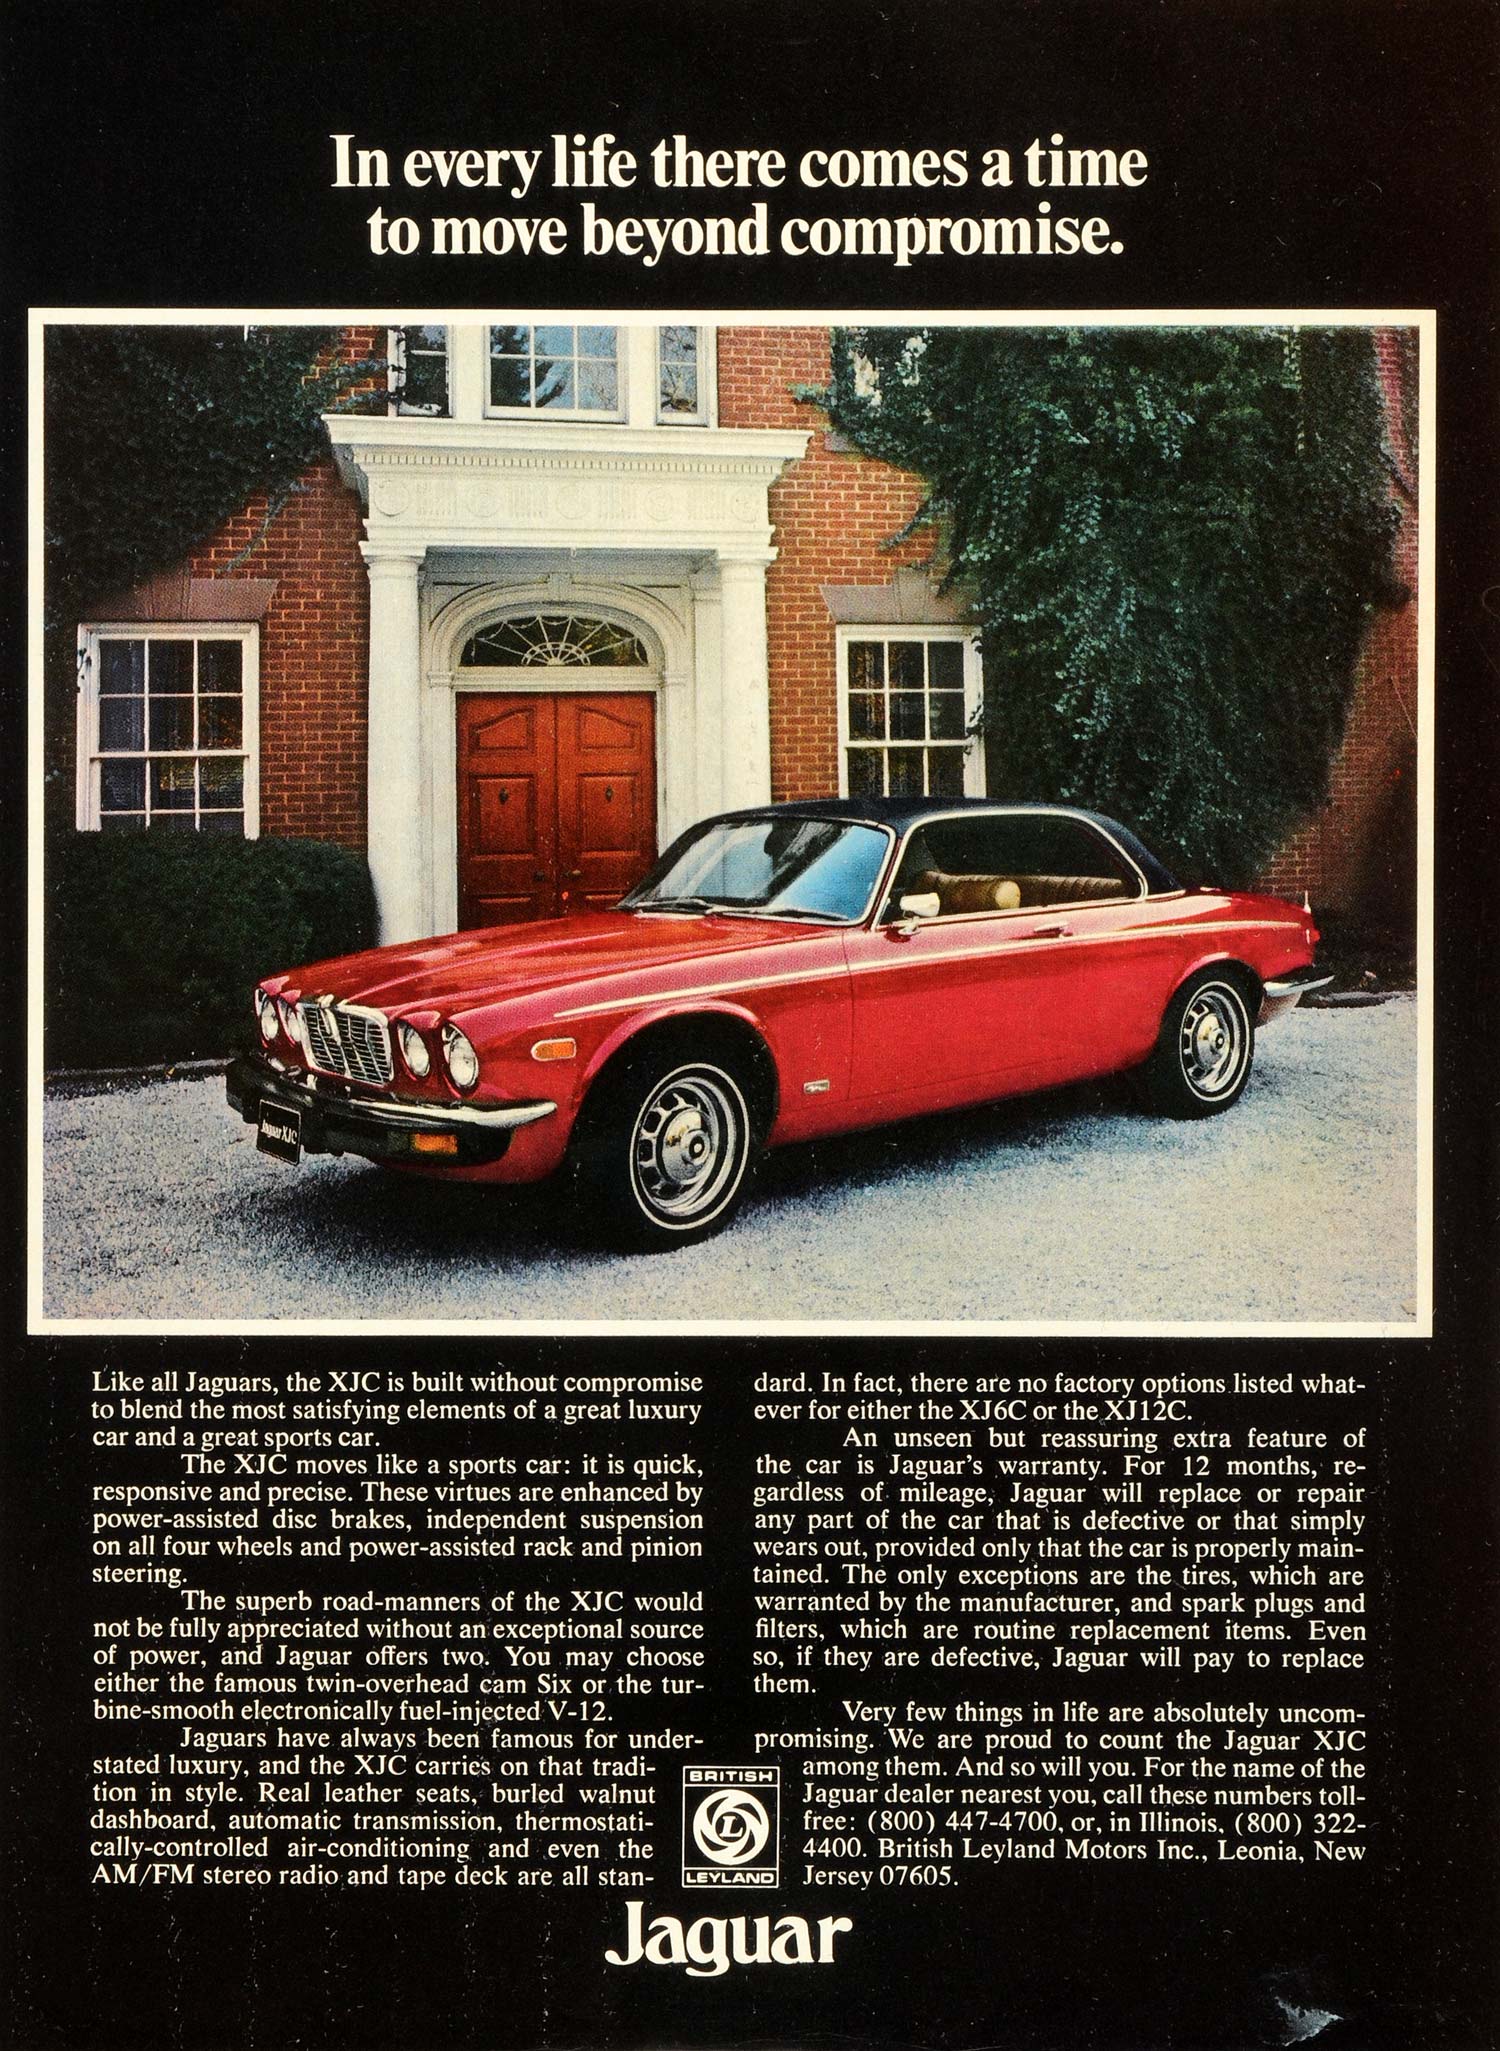 1976 Ad British Leyland Motors Inc Red XJC Jaguar Automobile Motor Vehicle NYM1